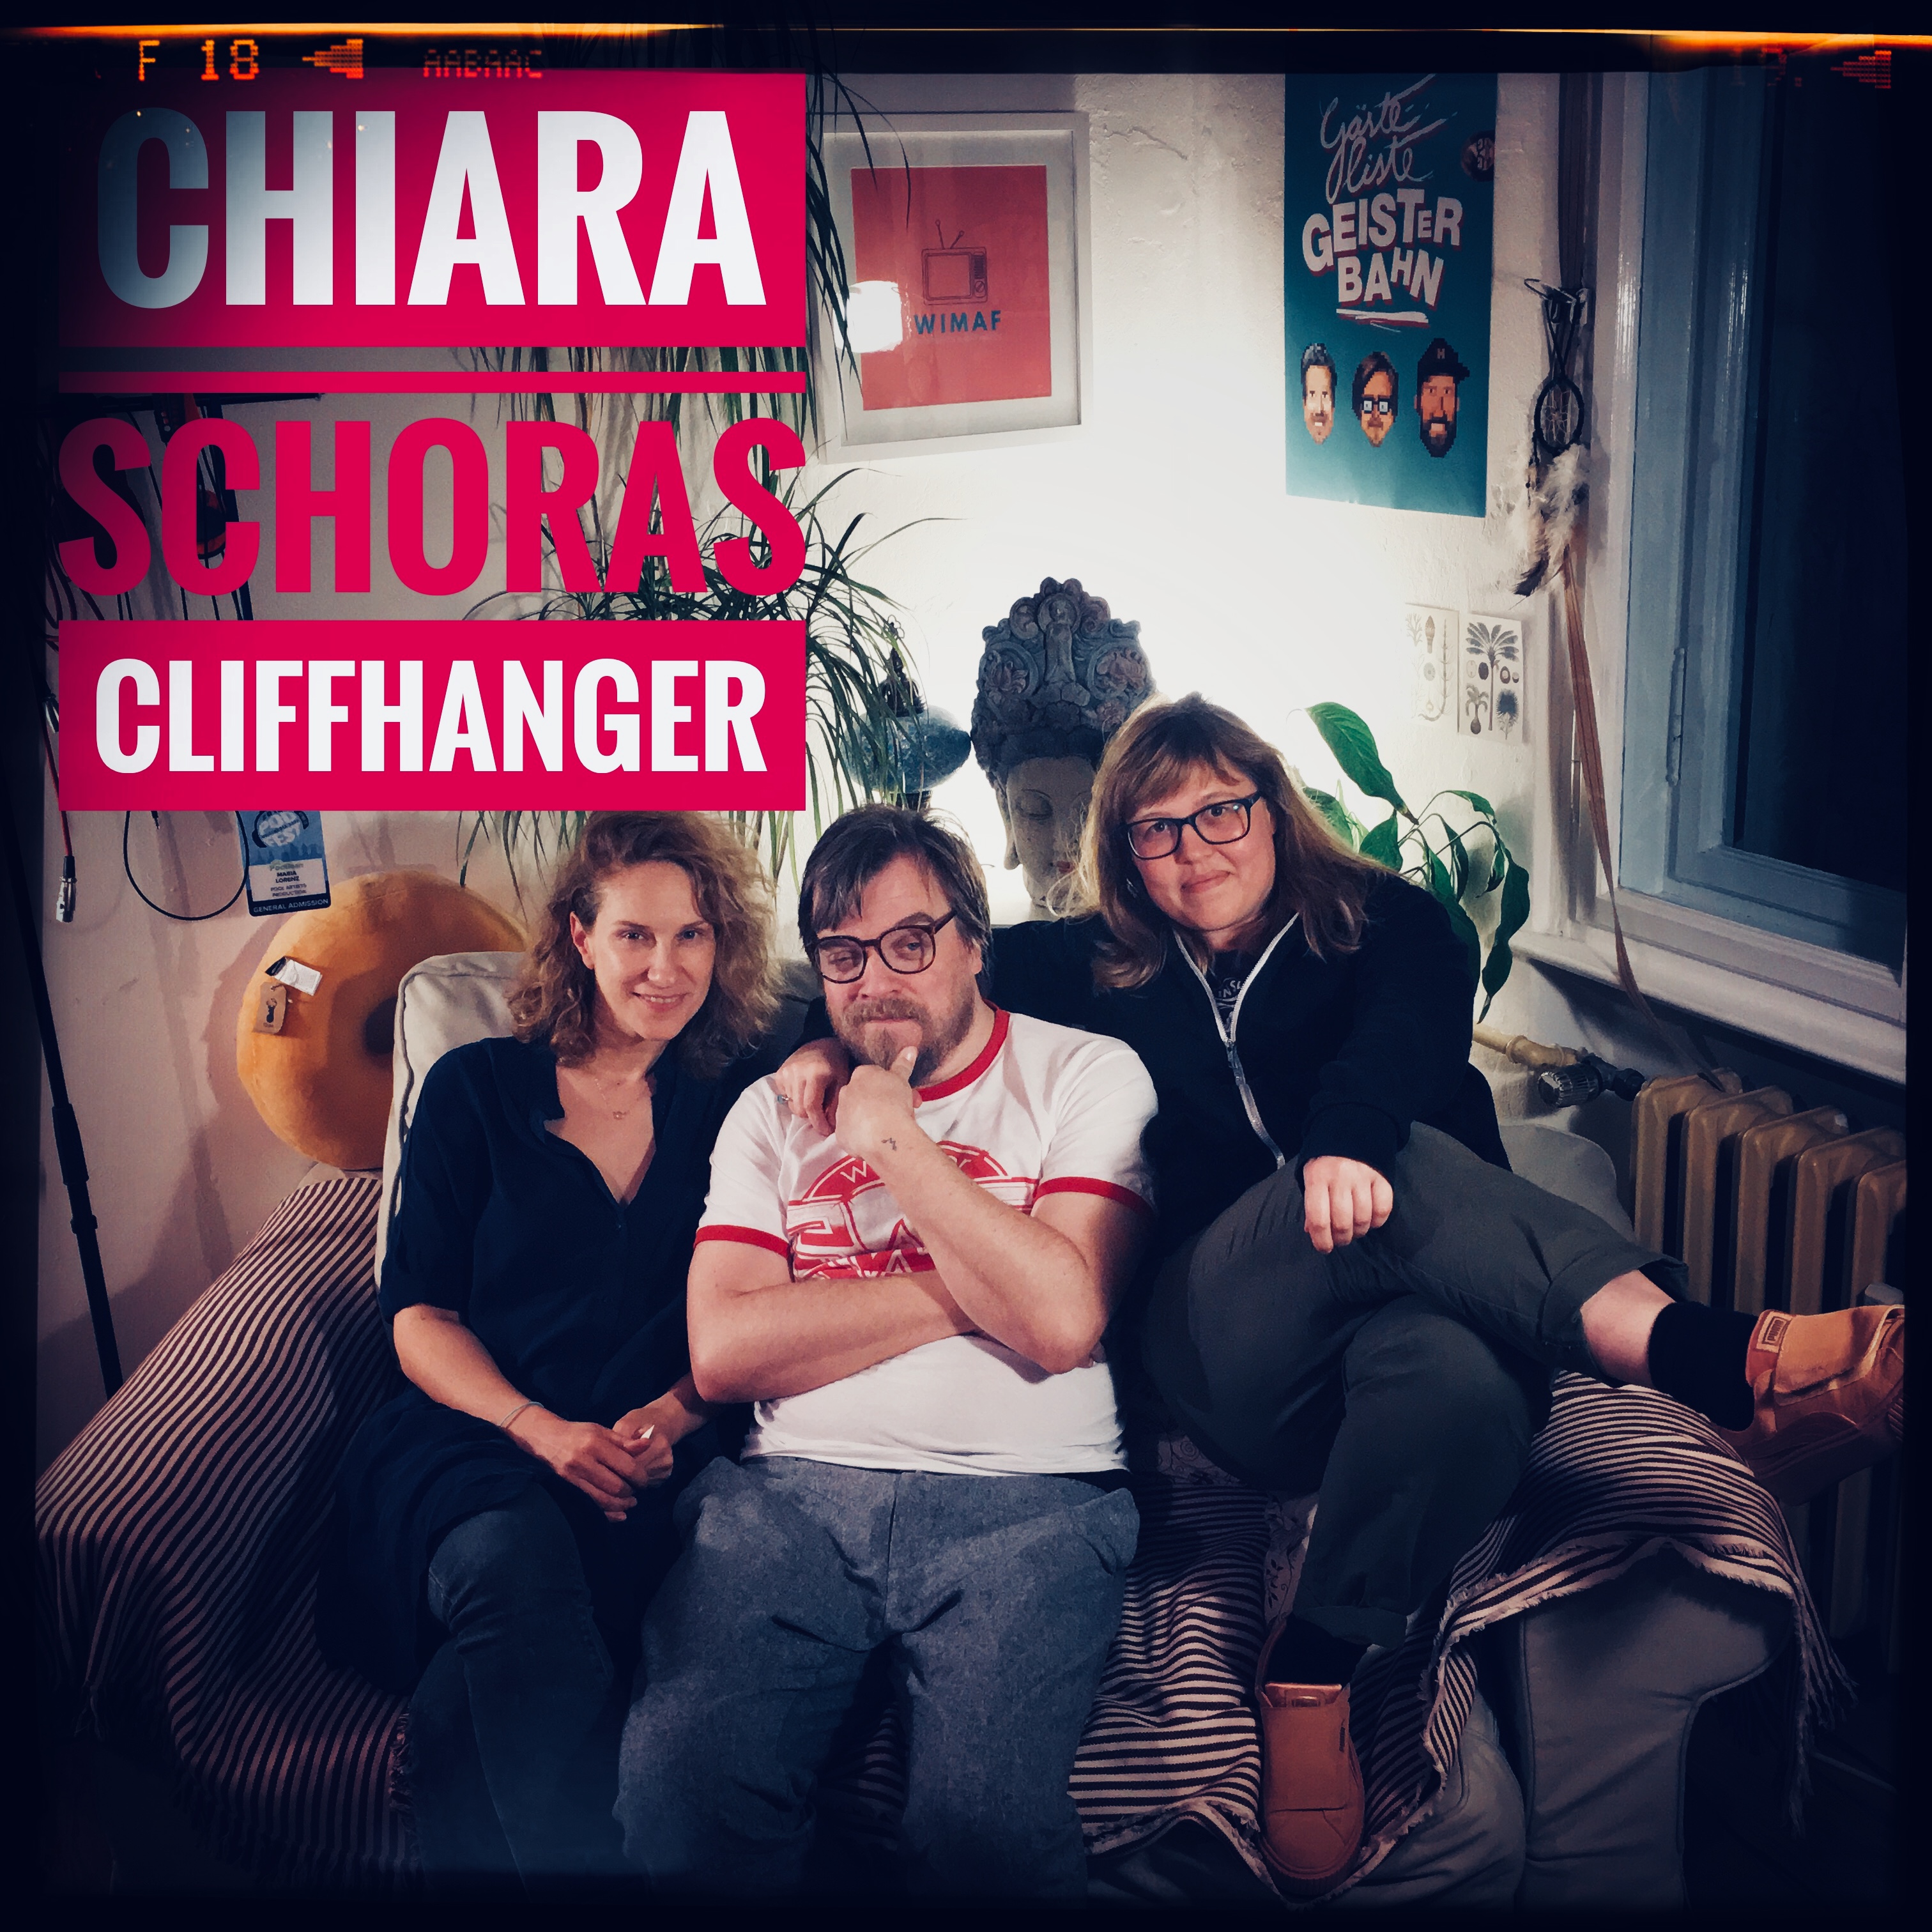 Chiara Schoras & Cliffhanger